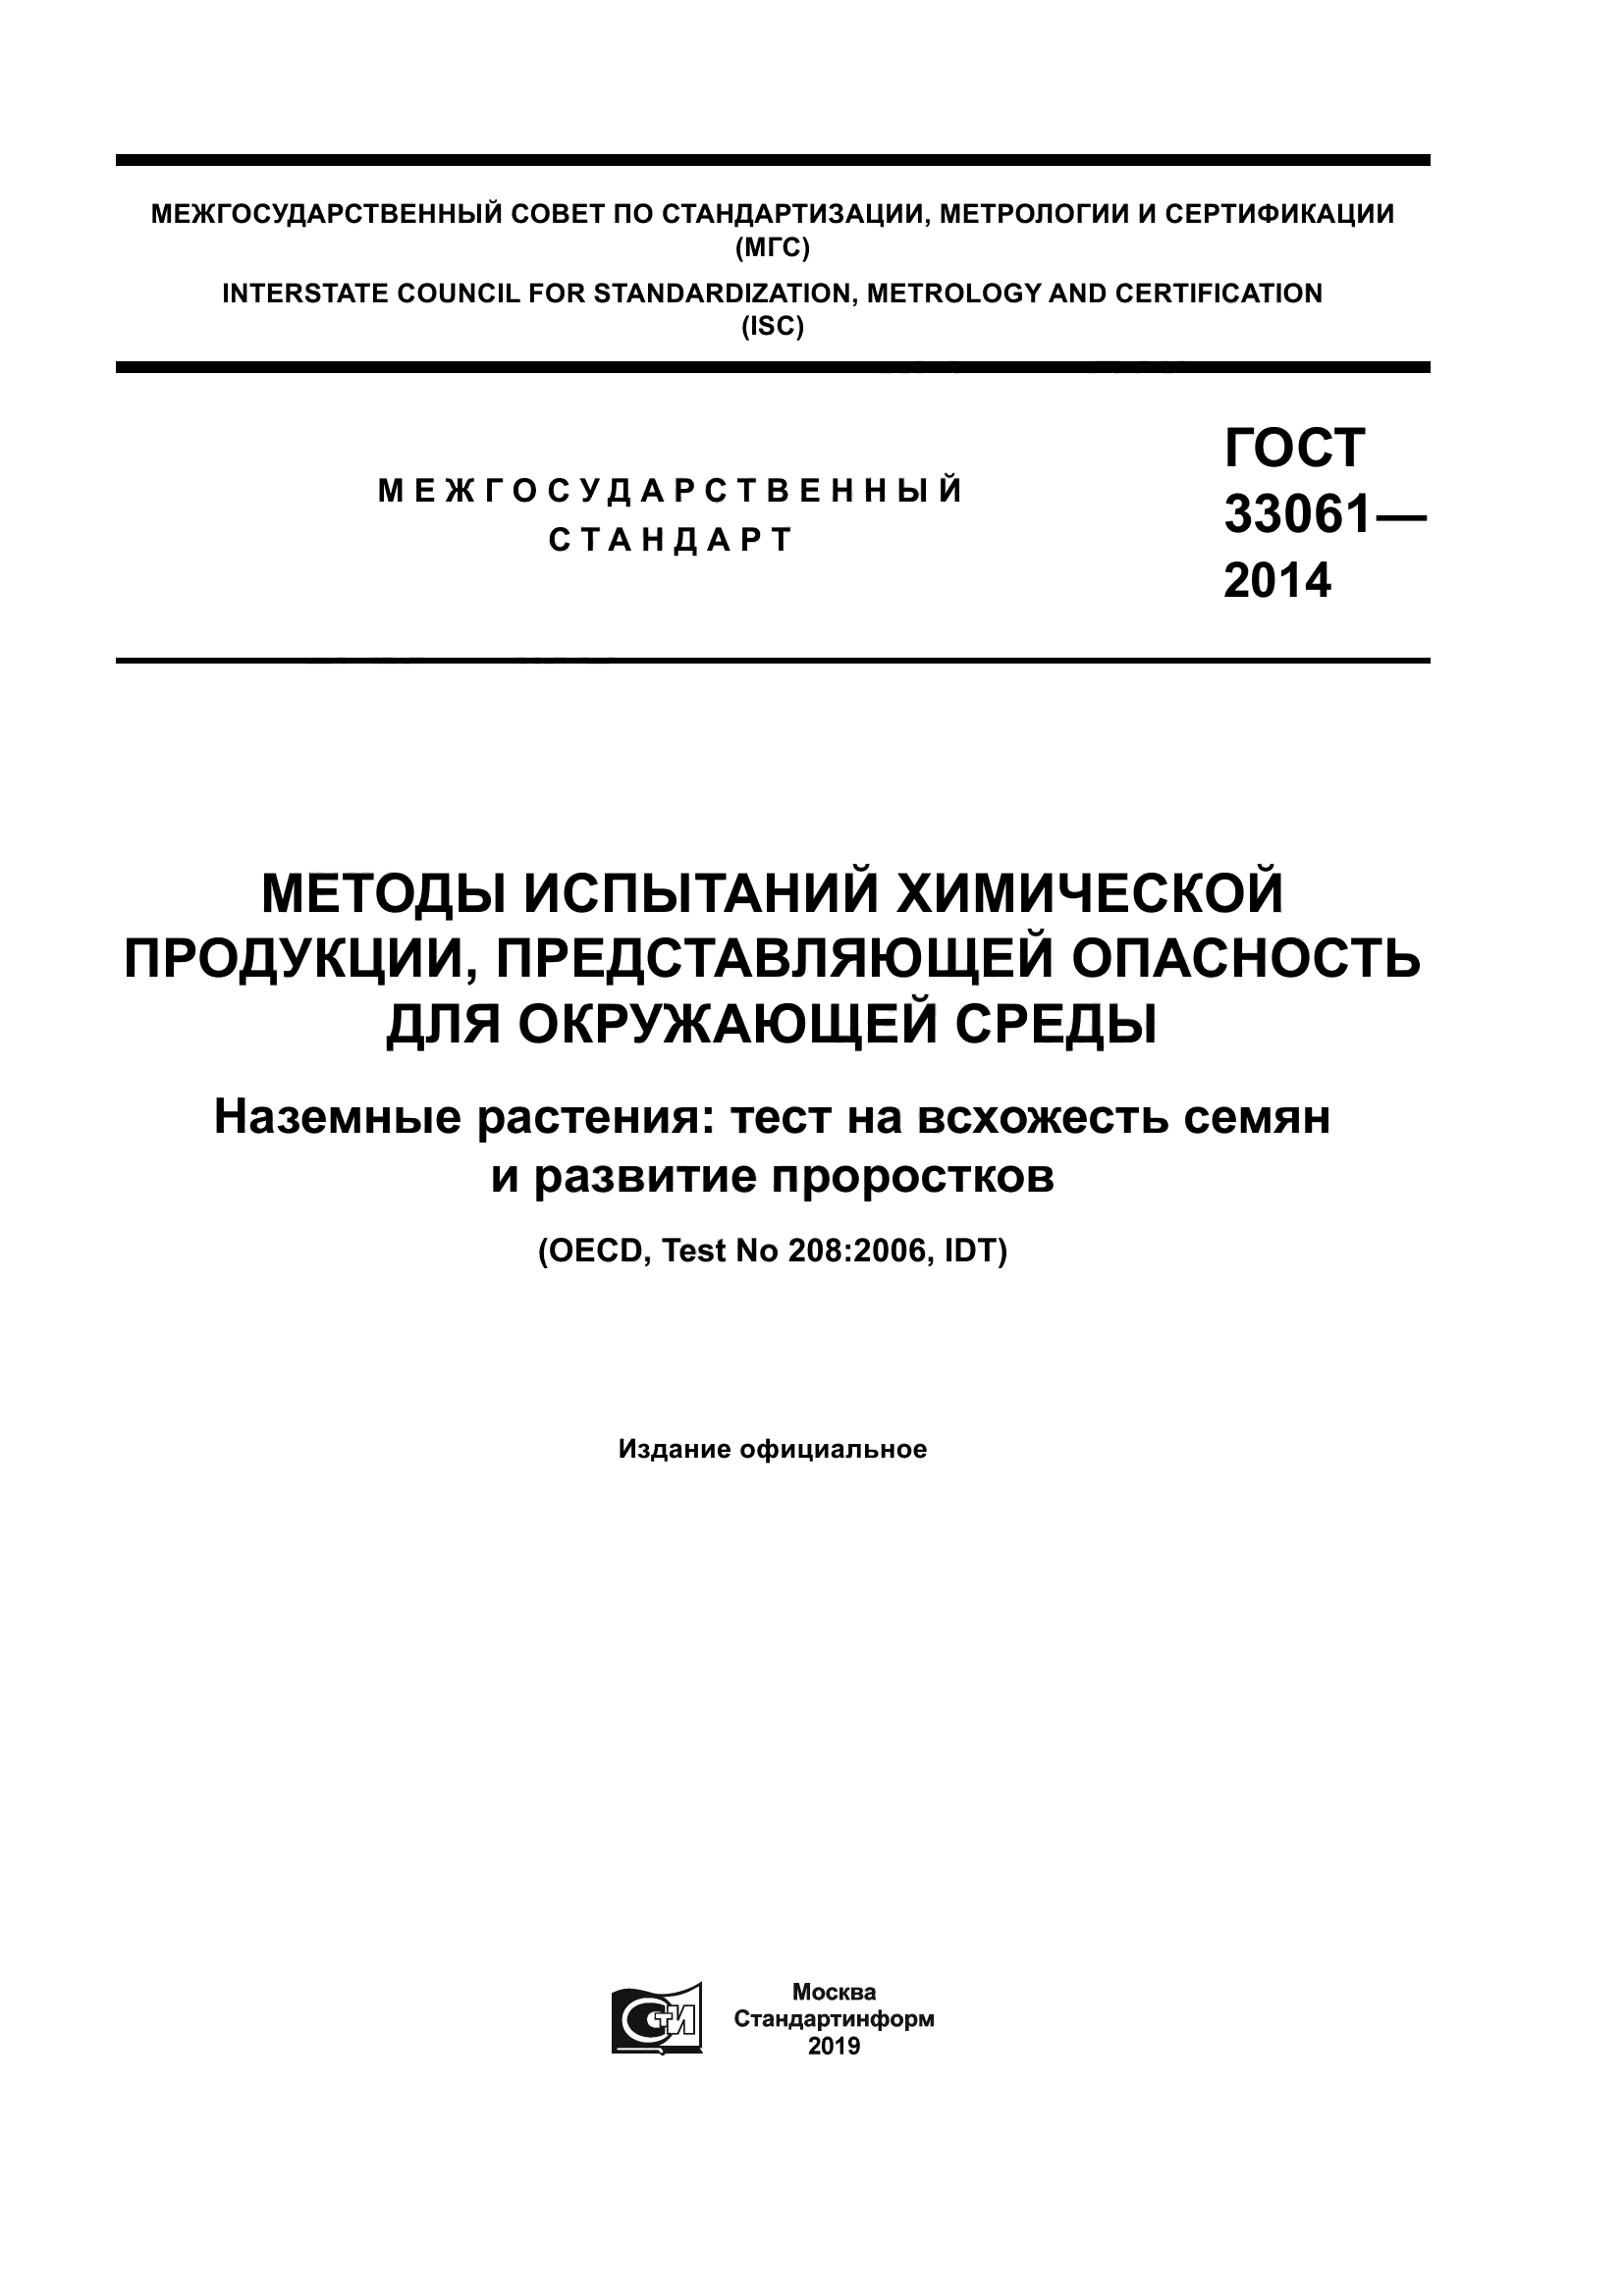 ГОСТ 33061-2014